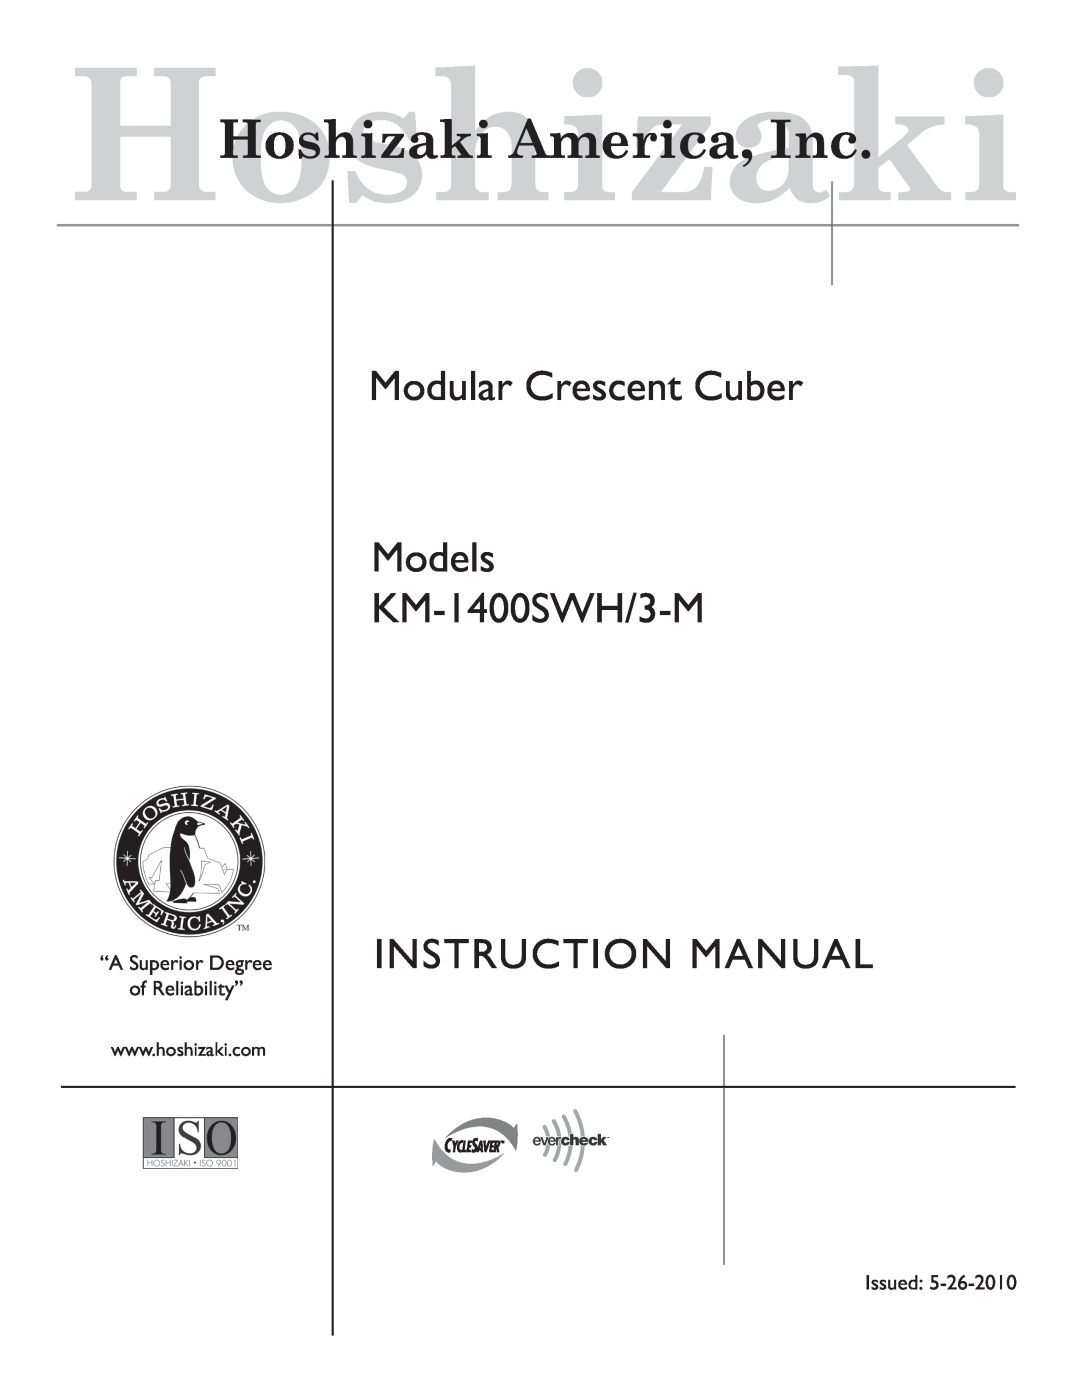 Hoshizaki instruction manual Modular Crescent Cuber Models KM-1400SWH/3-M, HoshizakiHoshizaki America, Inc 